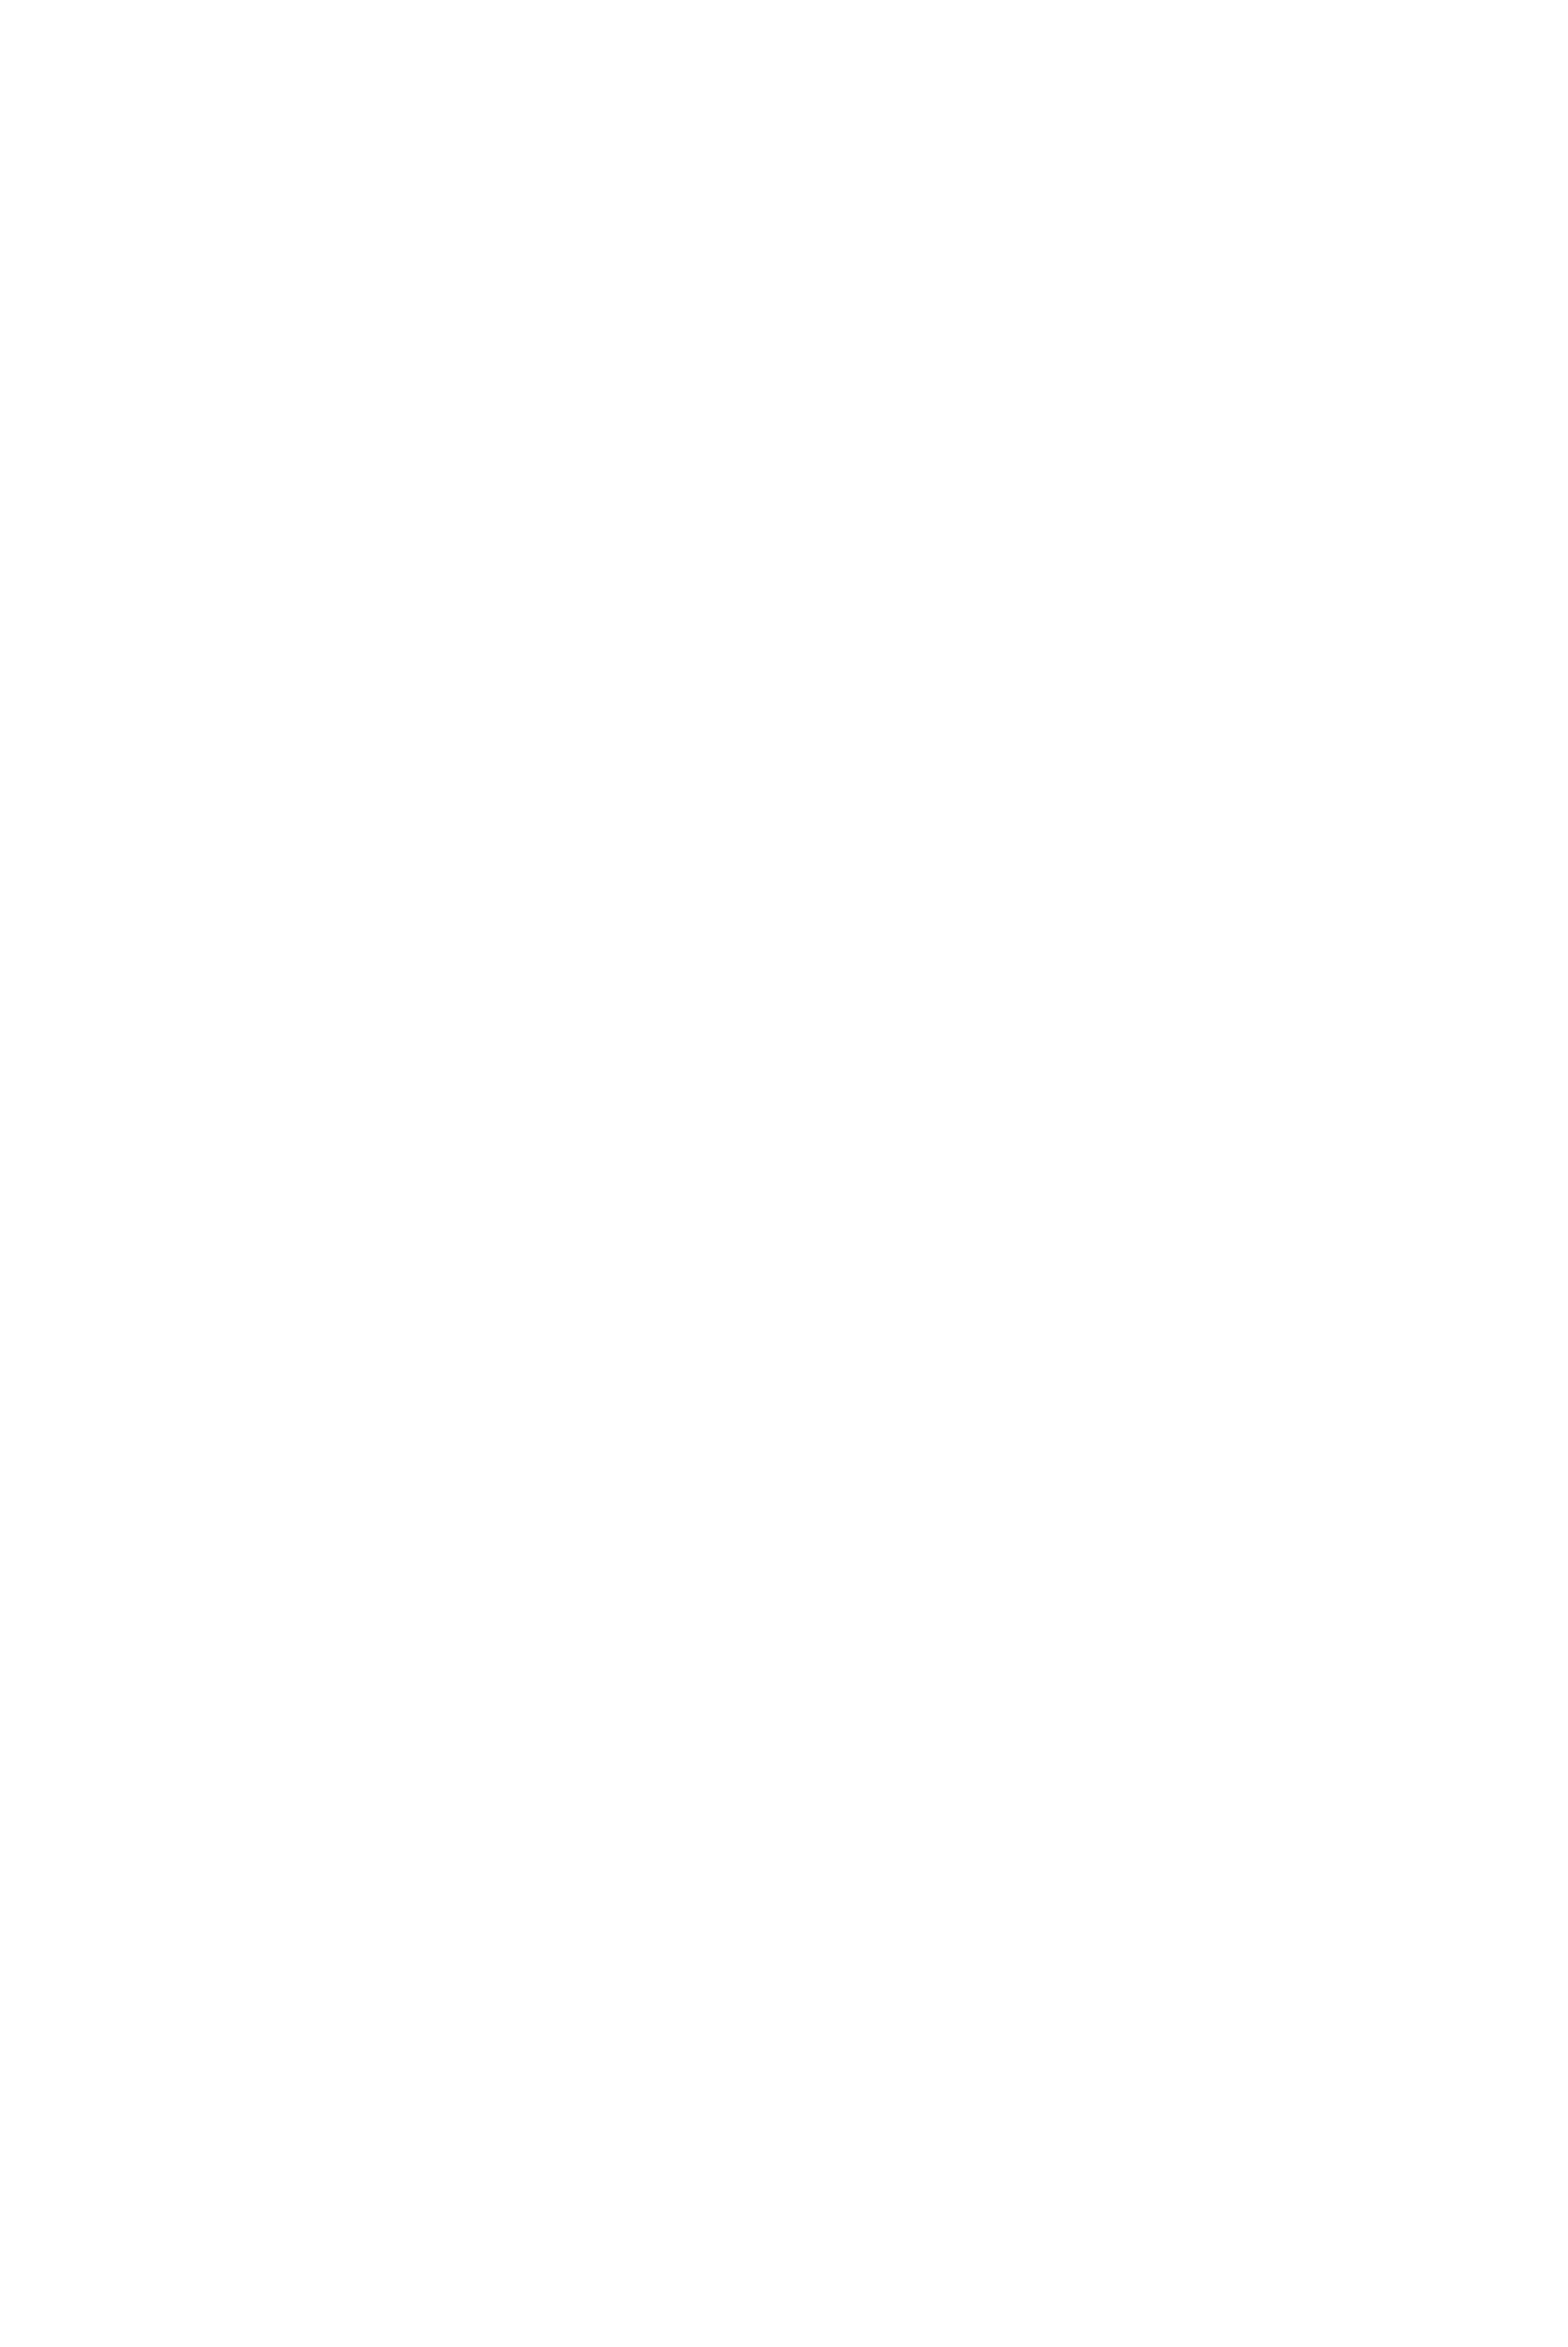 Вязаный джемпер по картине Ван Гога "Вид на Арль с ирисами на переднем плане" бренда "Таня Исаева"